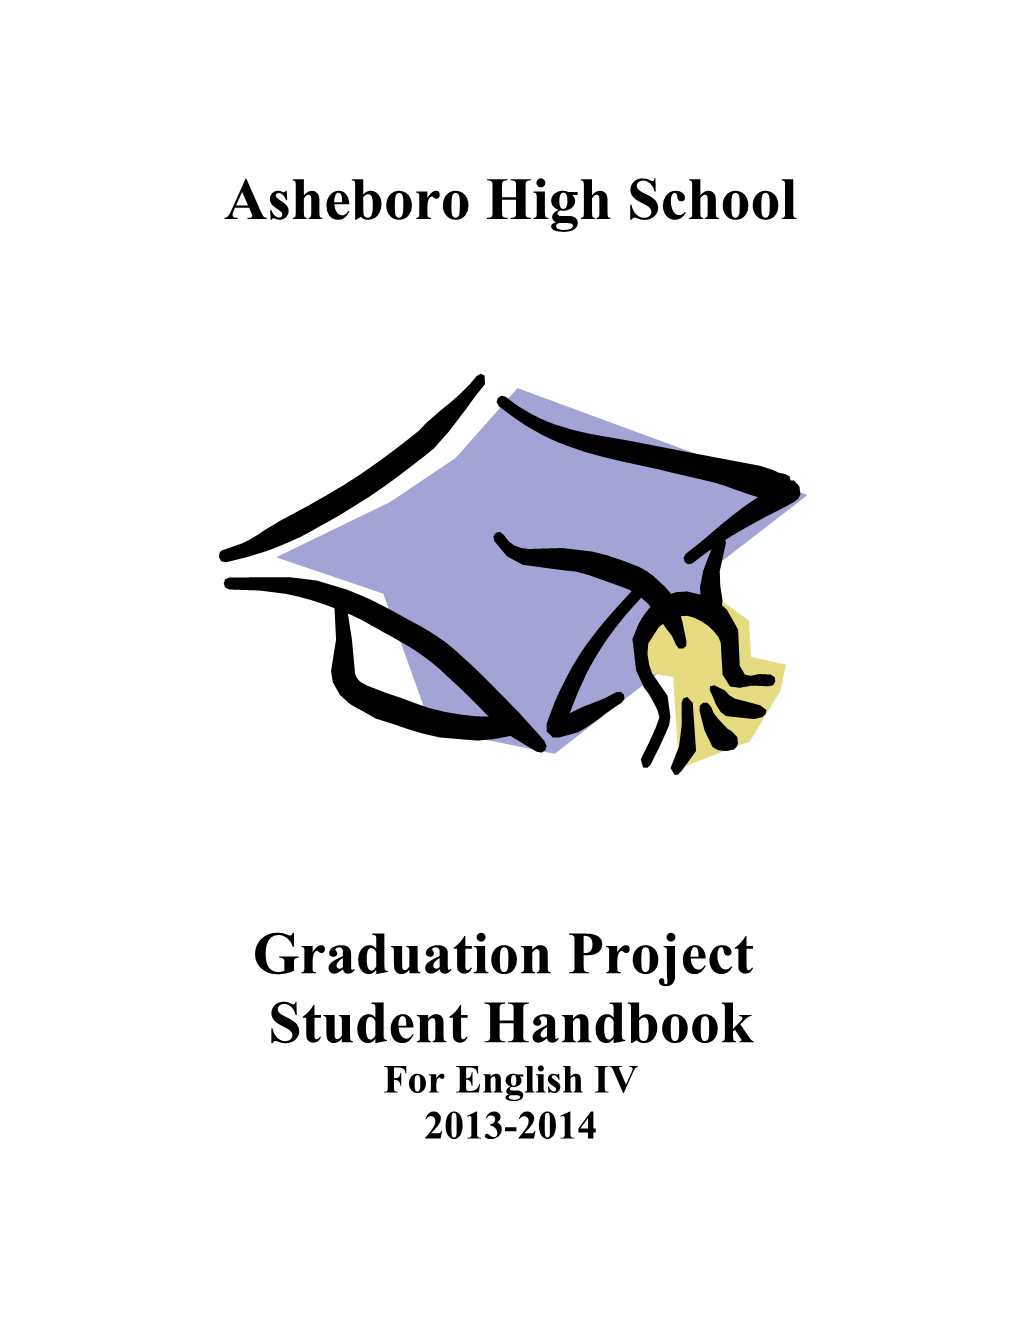 Asheboro High School